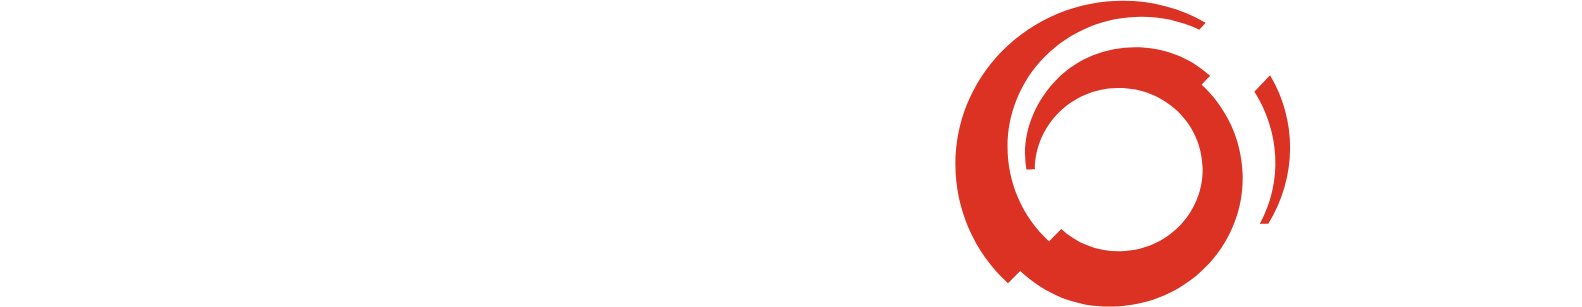 Alstom logo grand pour les fonds sombres (PNG transparent)